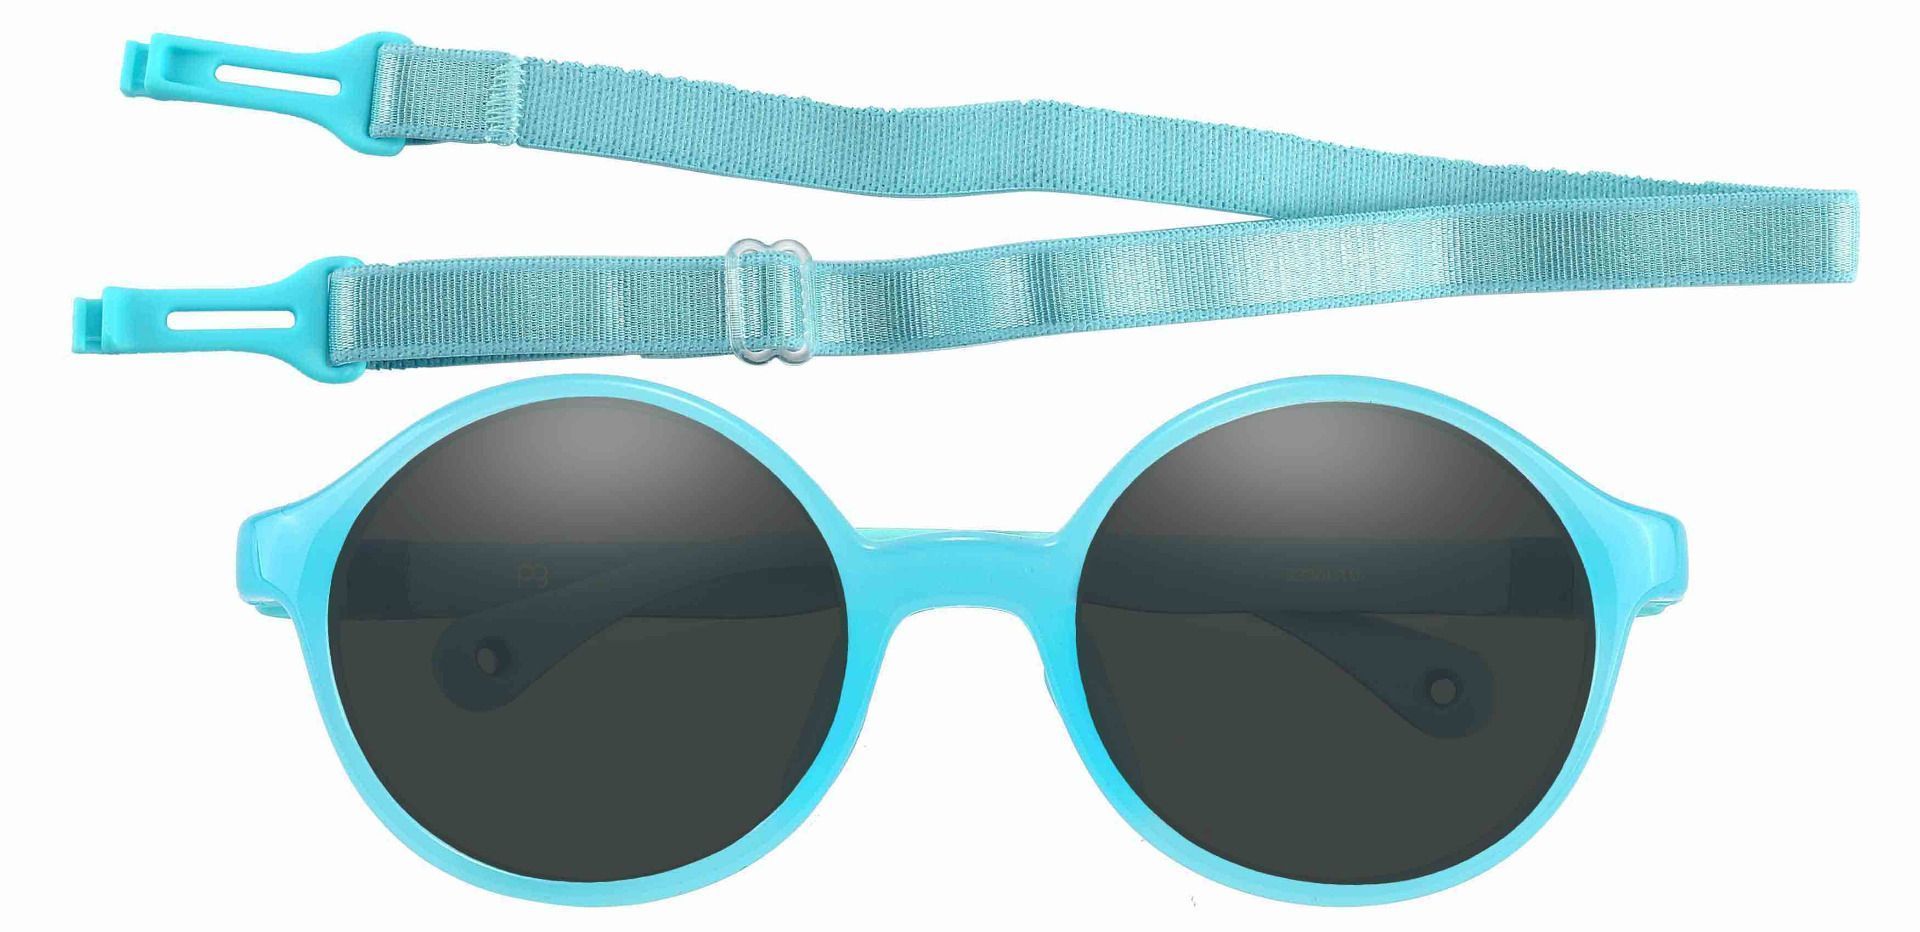 Sammy Round Non-Rx Sunglasses - Blue Frame With Gray Lenses